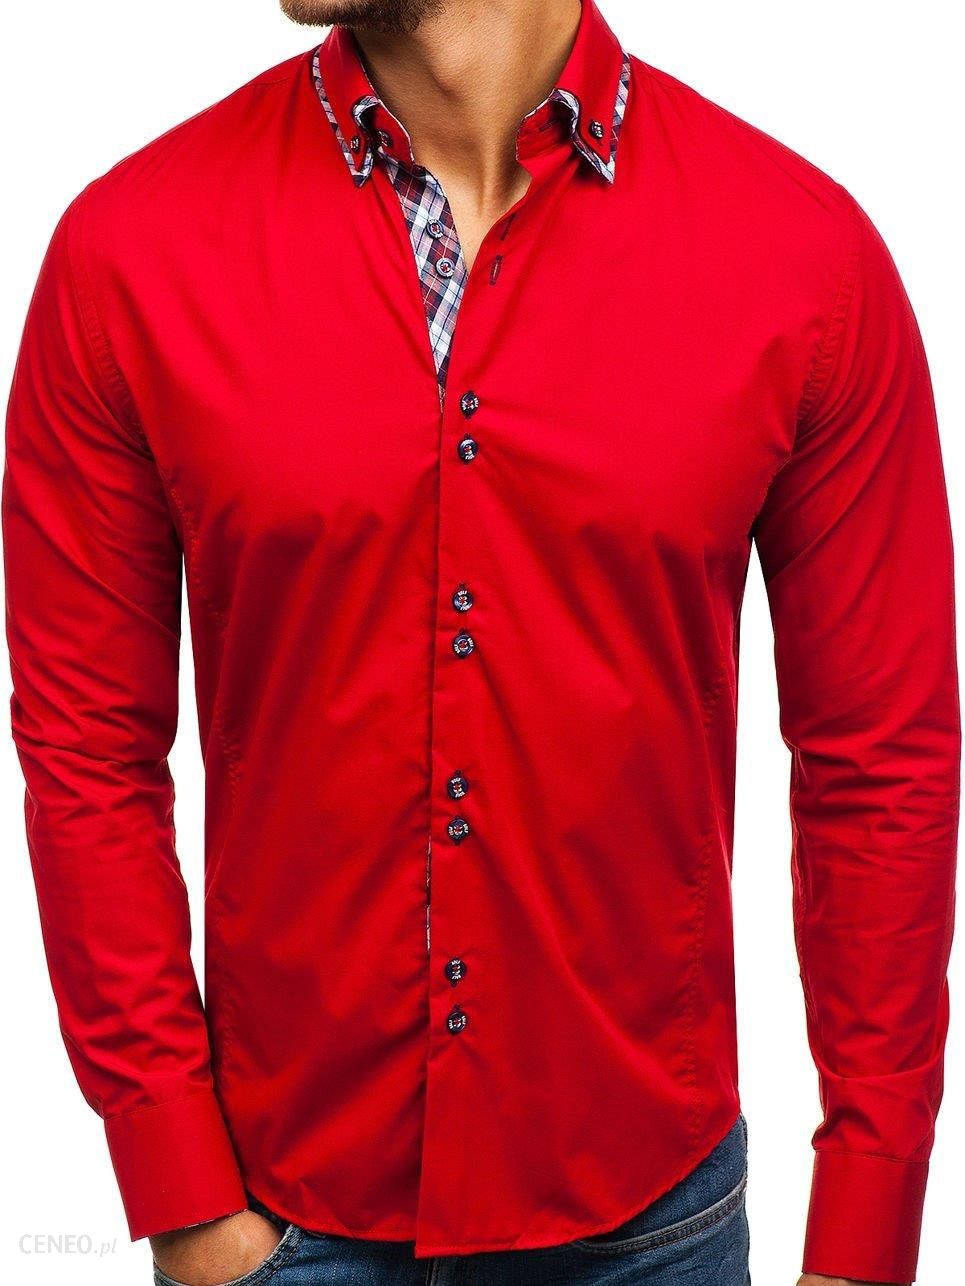 Красная рубашка текст. Рубашка мужская MCR красная. Мужская рубашка Bolf. Ярко красная рубашка мужская. Мужская рубашка красного цвета.